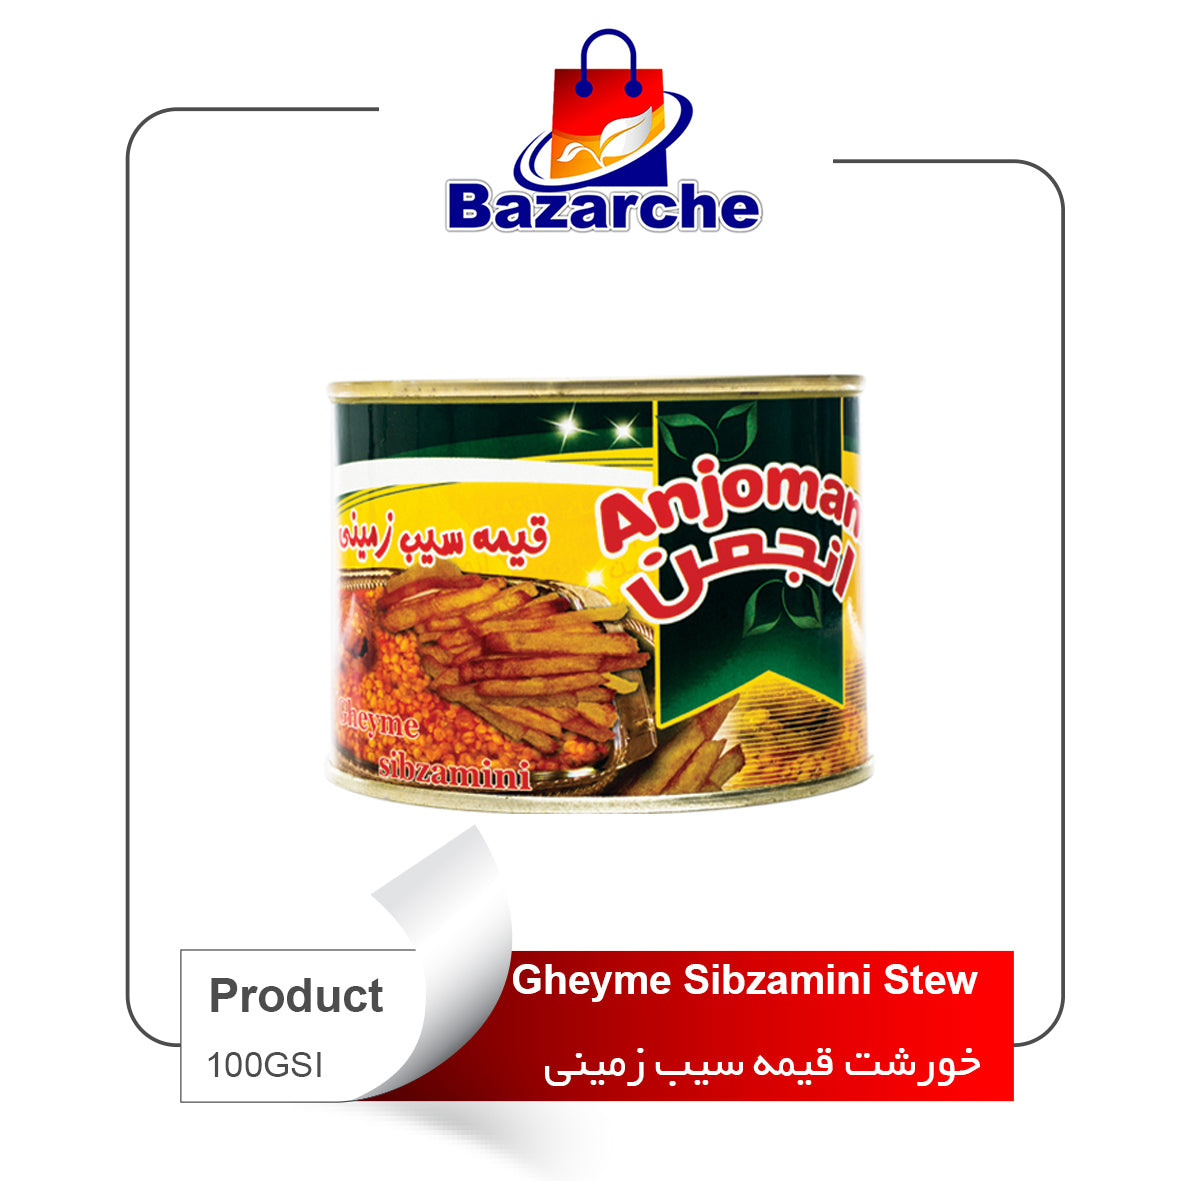 Gheyme Sibzamini Stew(قیمه سیب زمینی)